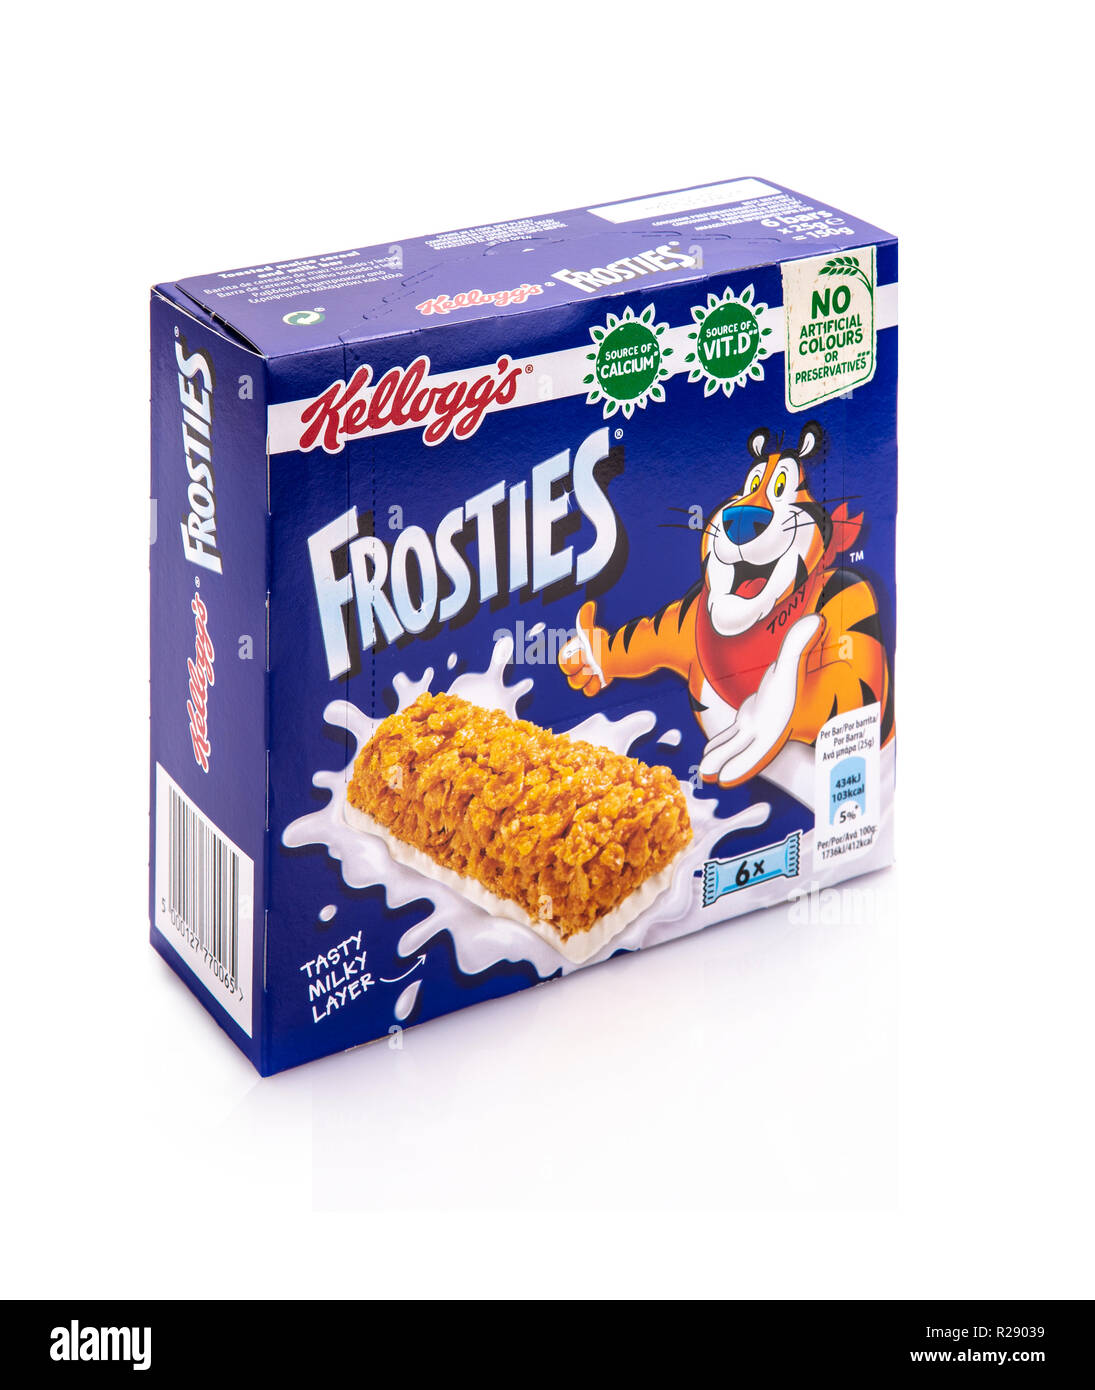 SWINDON, UK - NOVEMBER 18 2018: Box of Kelloggs Frosties cereal bars on  white background Stock Photo